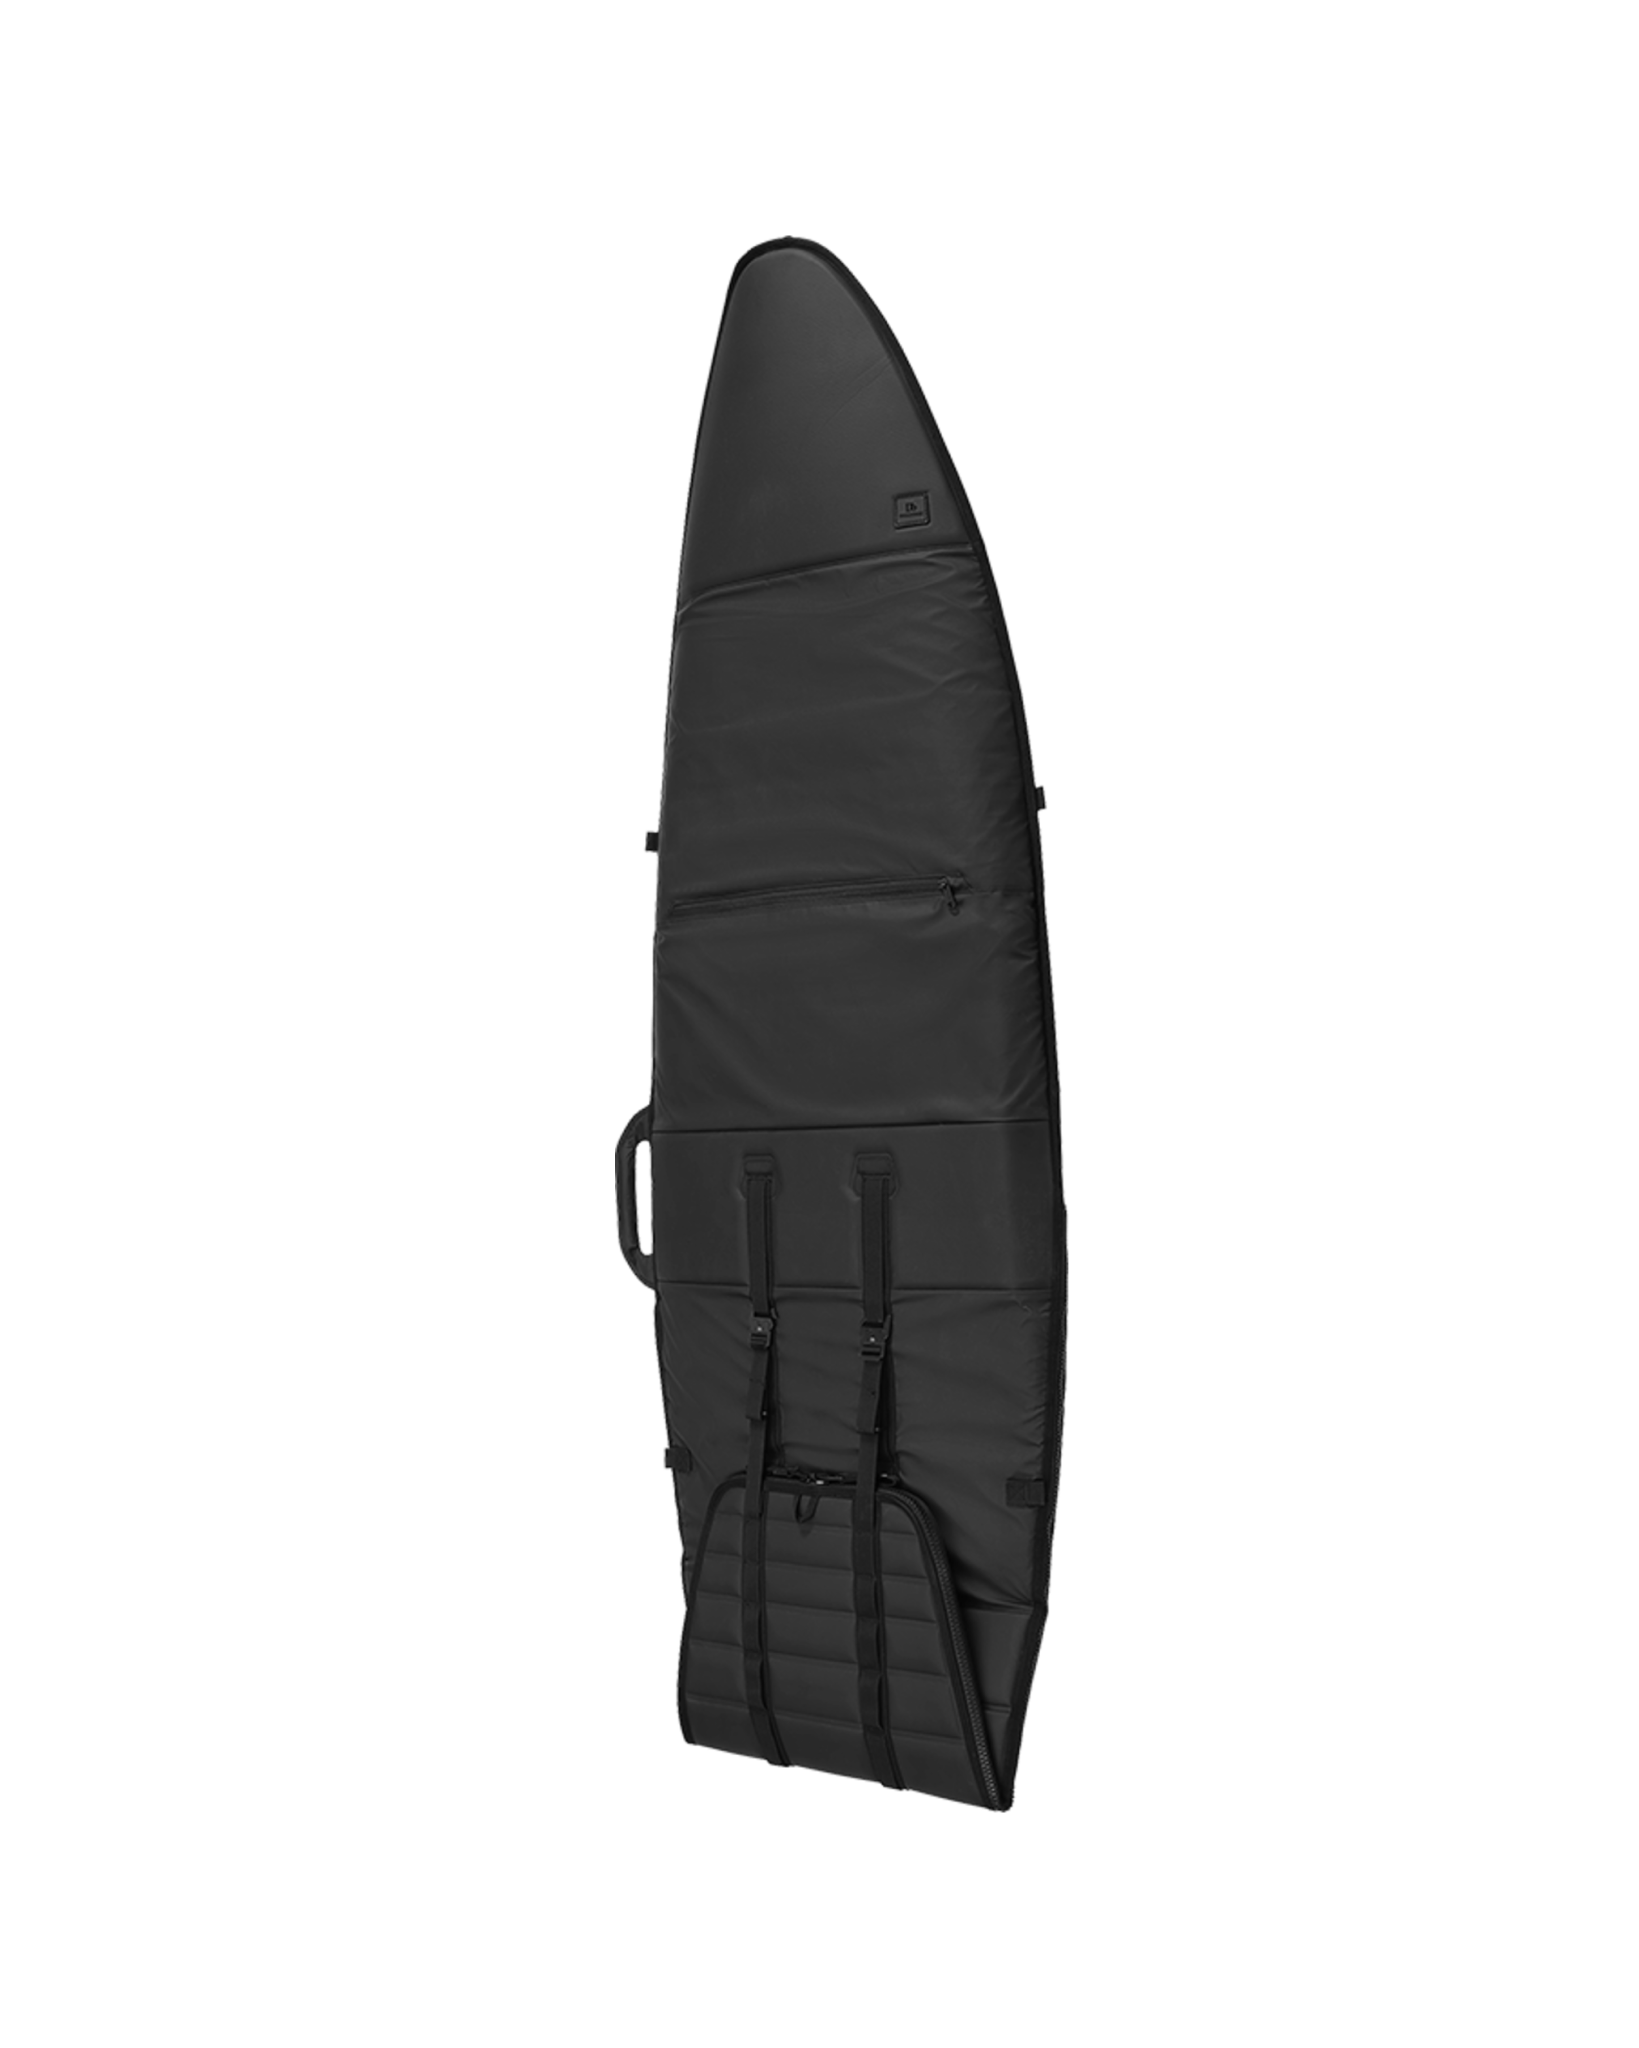 The Djarv Single Surfboard Bag